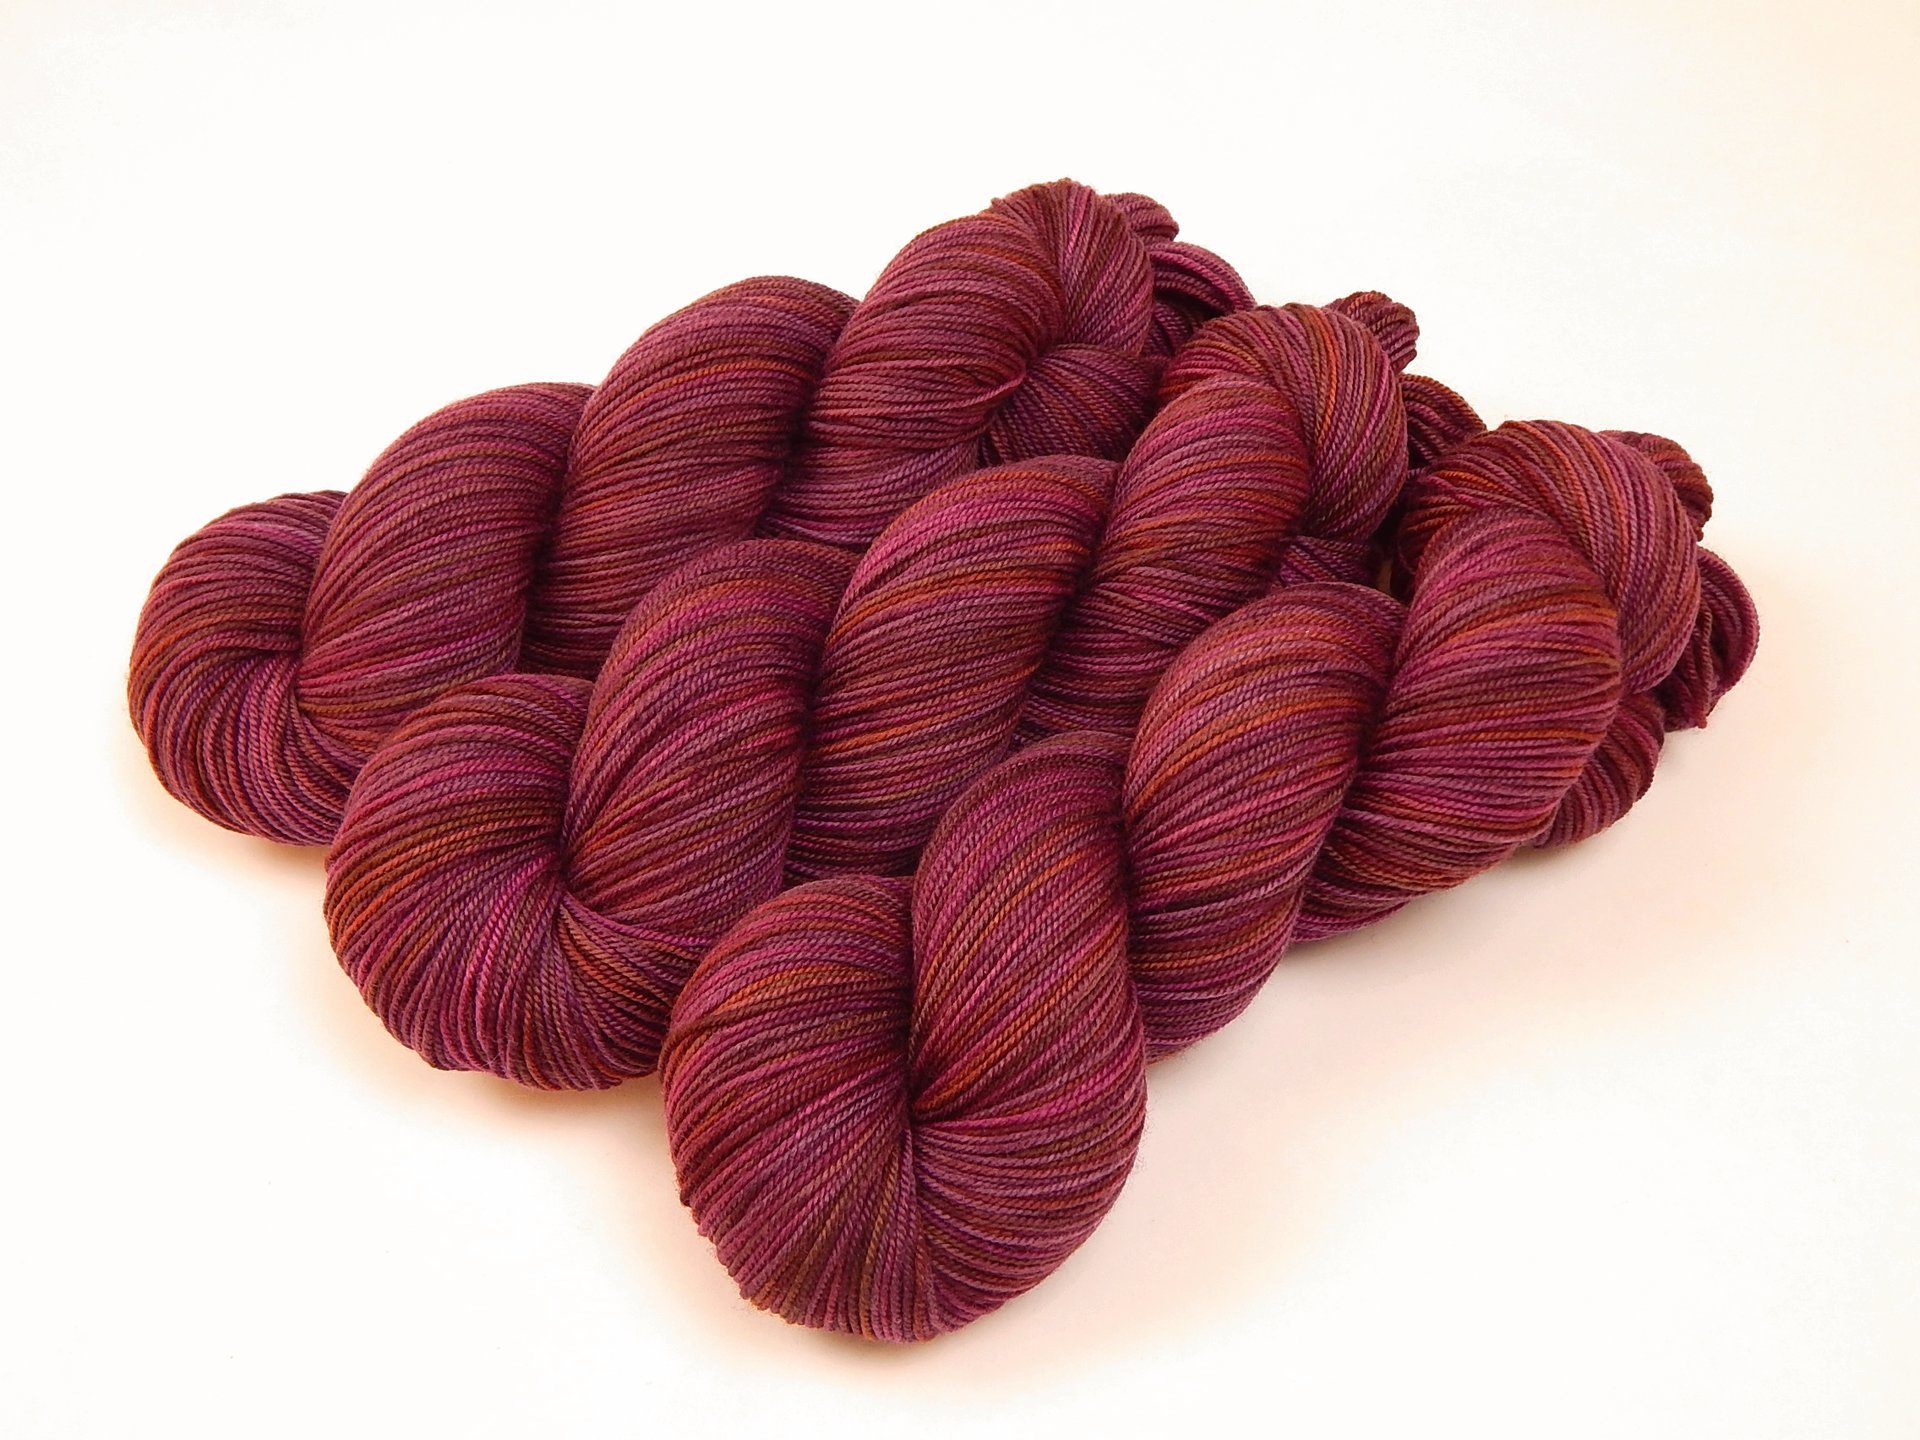 Limited Edition! Hand Dyed Yarn, Light Fingering Weight Superwash Merino Wool & Nylon Blend - Merlot Multi - Indie Dyer Knitting Yarn, Burgundy Wine